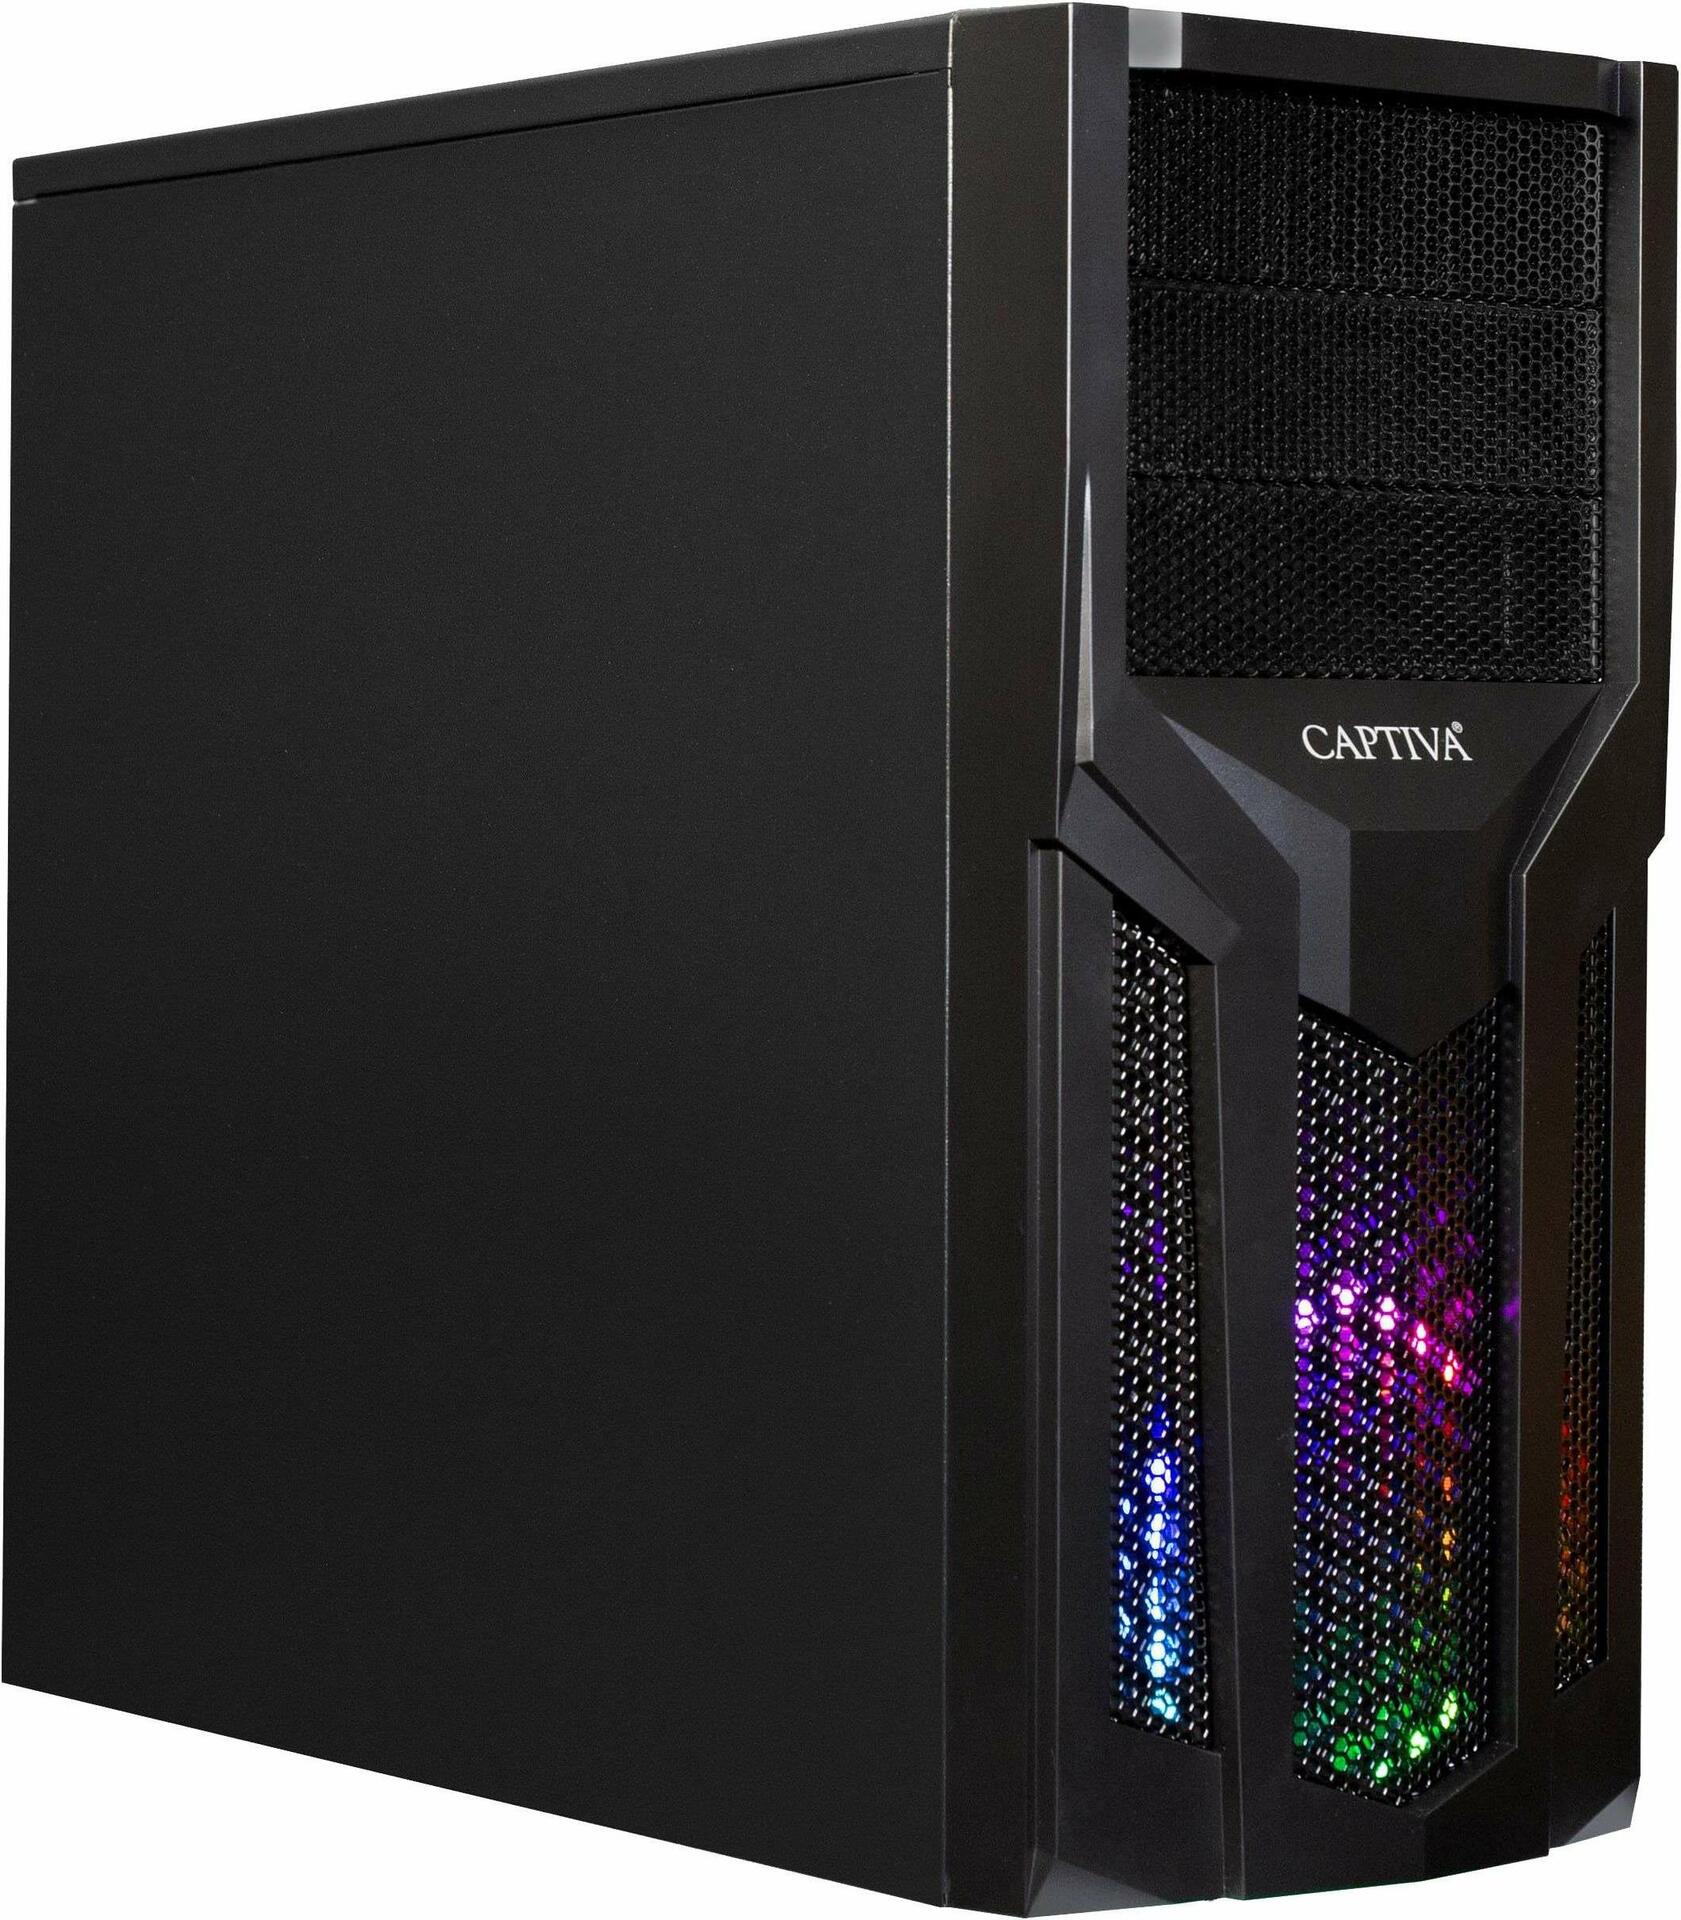 CAPTIVA Power Starter R62-189 AMD Ryzen 3 8 GB DDR4-SDRAM 250 GB SSD (62189) von Captiva